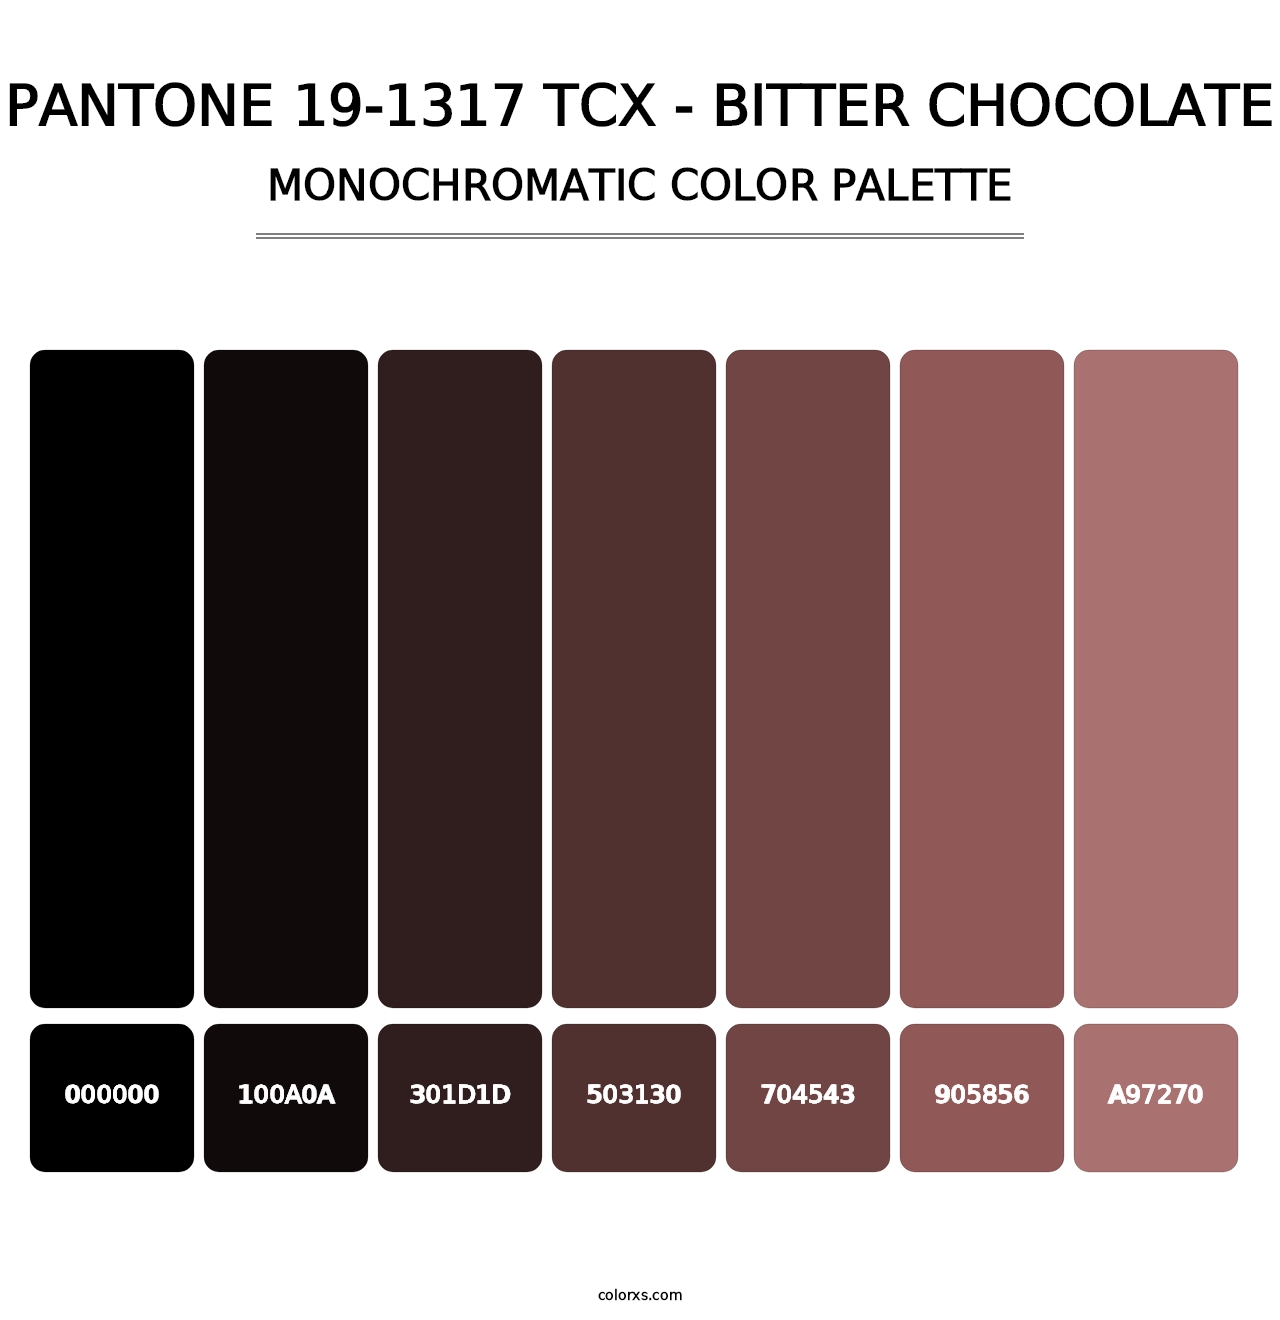 PANTONE 19-1317 TCX - Bitter Chocolate - Monochromatic Color Palette